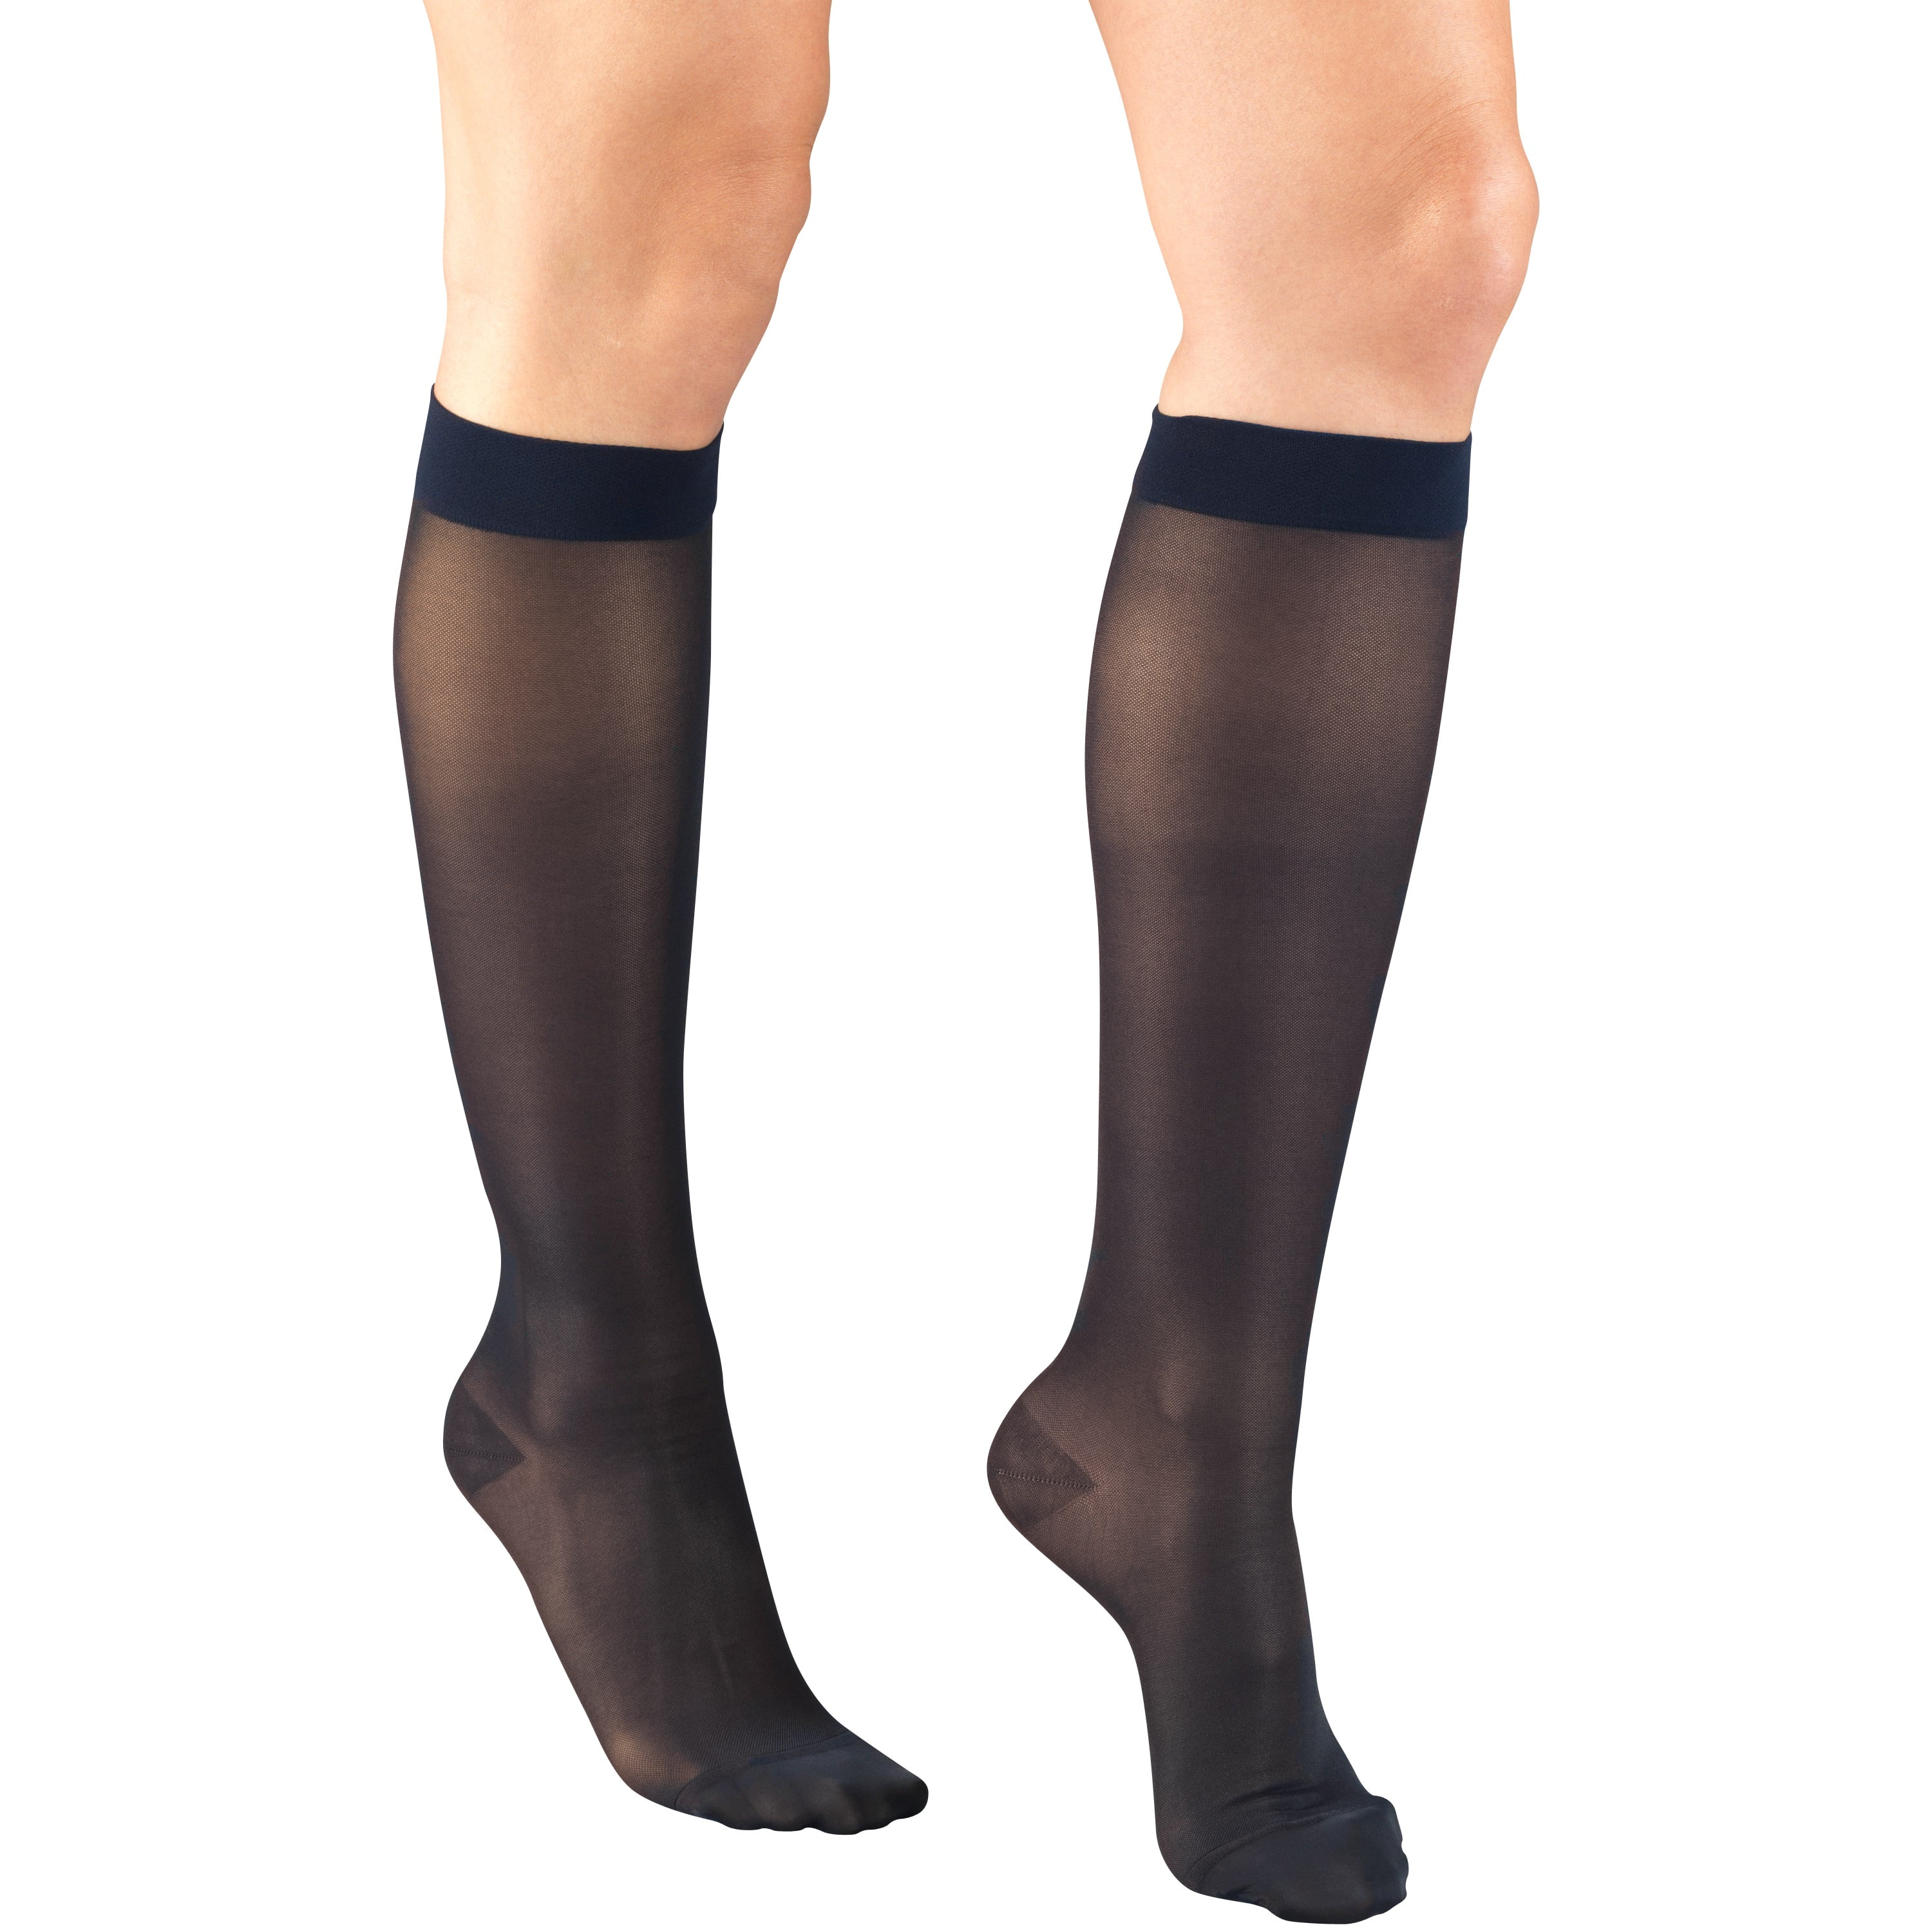 Women's Stockings, Knee High, Sheer: 15-20 mmHg, Navy, Small